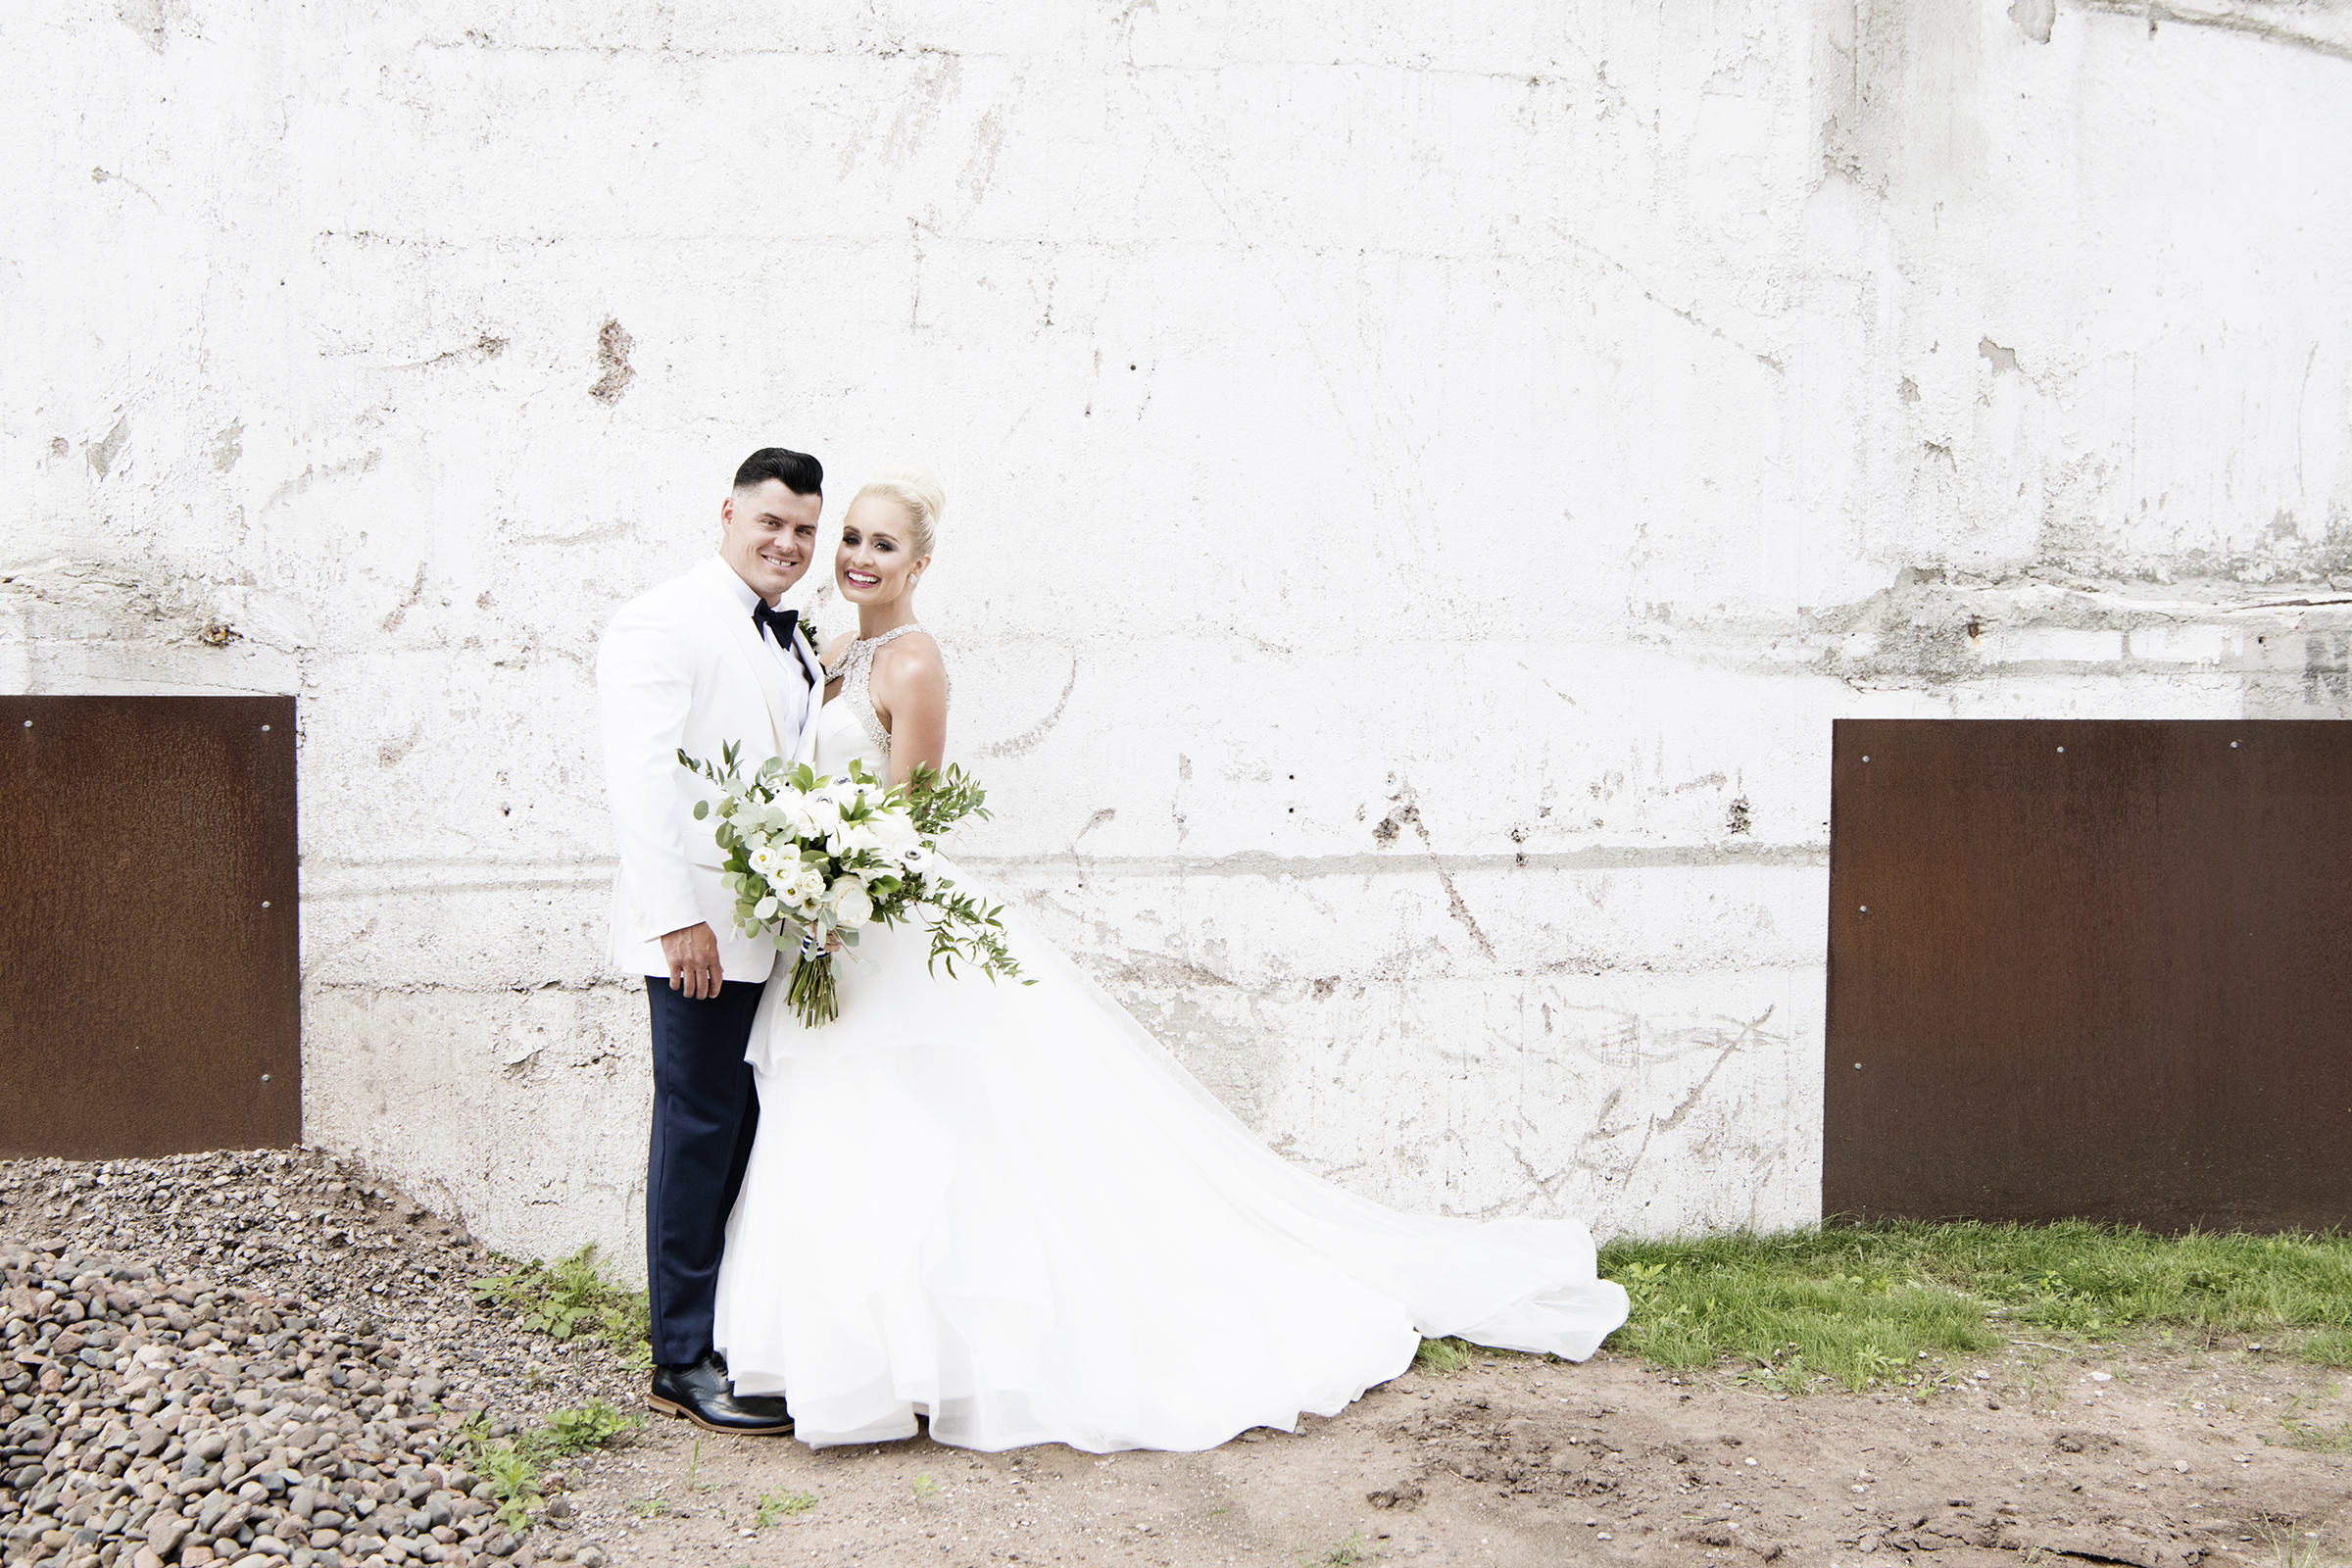 Duluth, Minnesota Wedding Photos | Photography by Photogen Inc. | Eliesa Johnson | Luxury Wedding Photography Based in Minneapolis, Minnesota